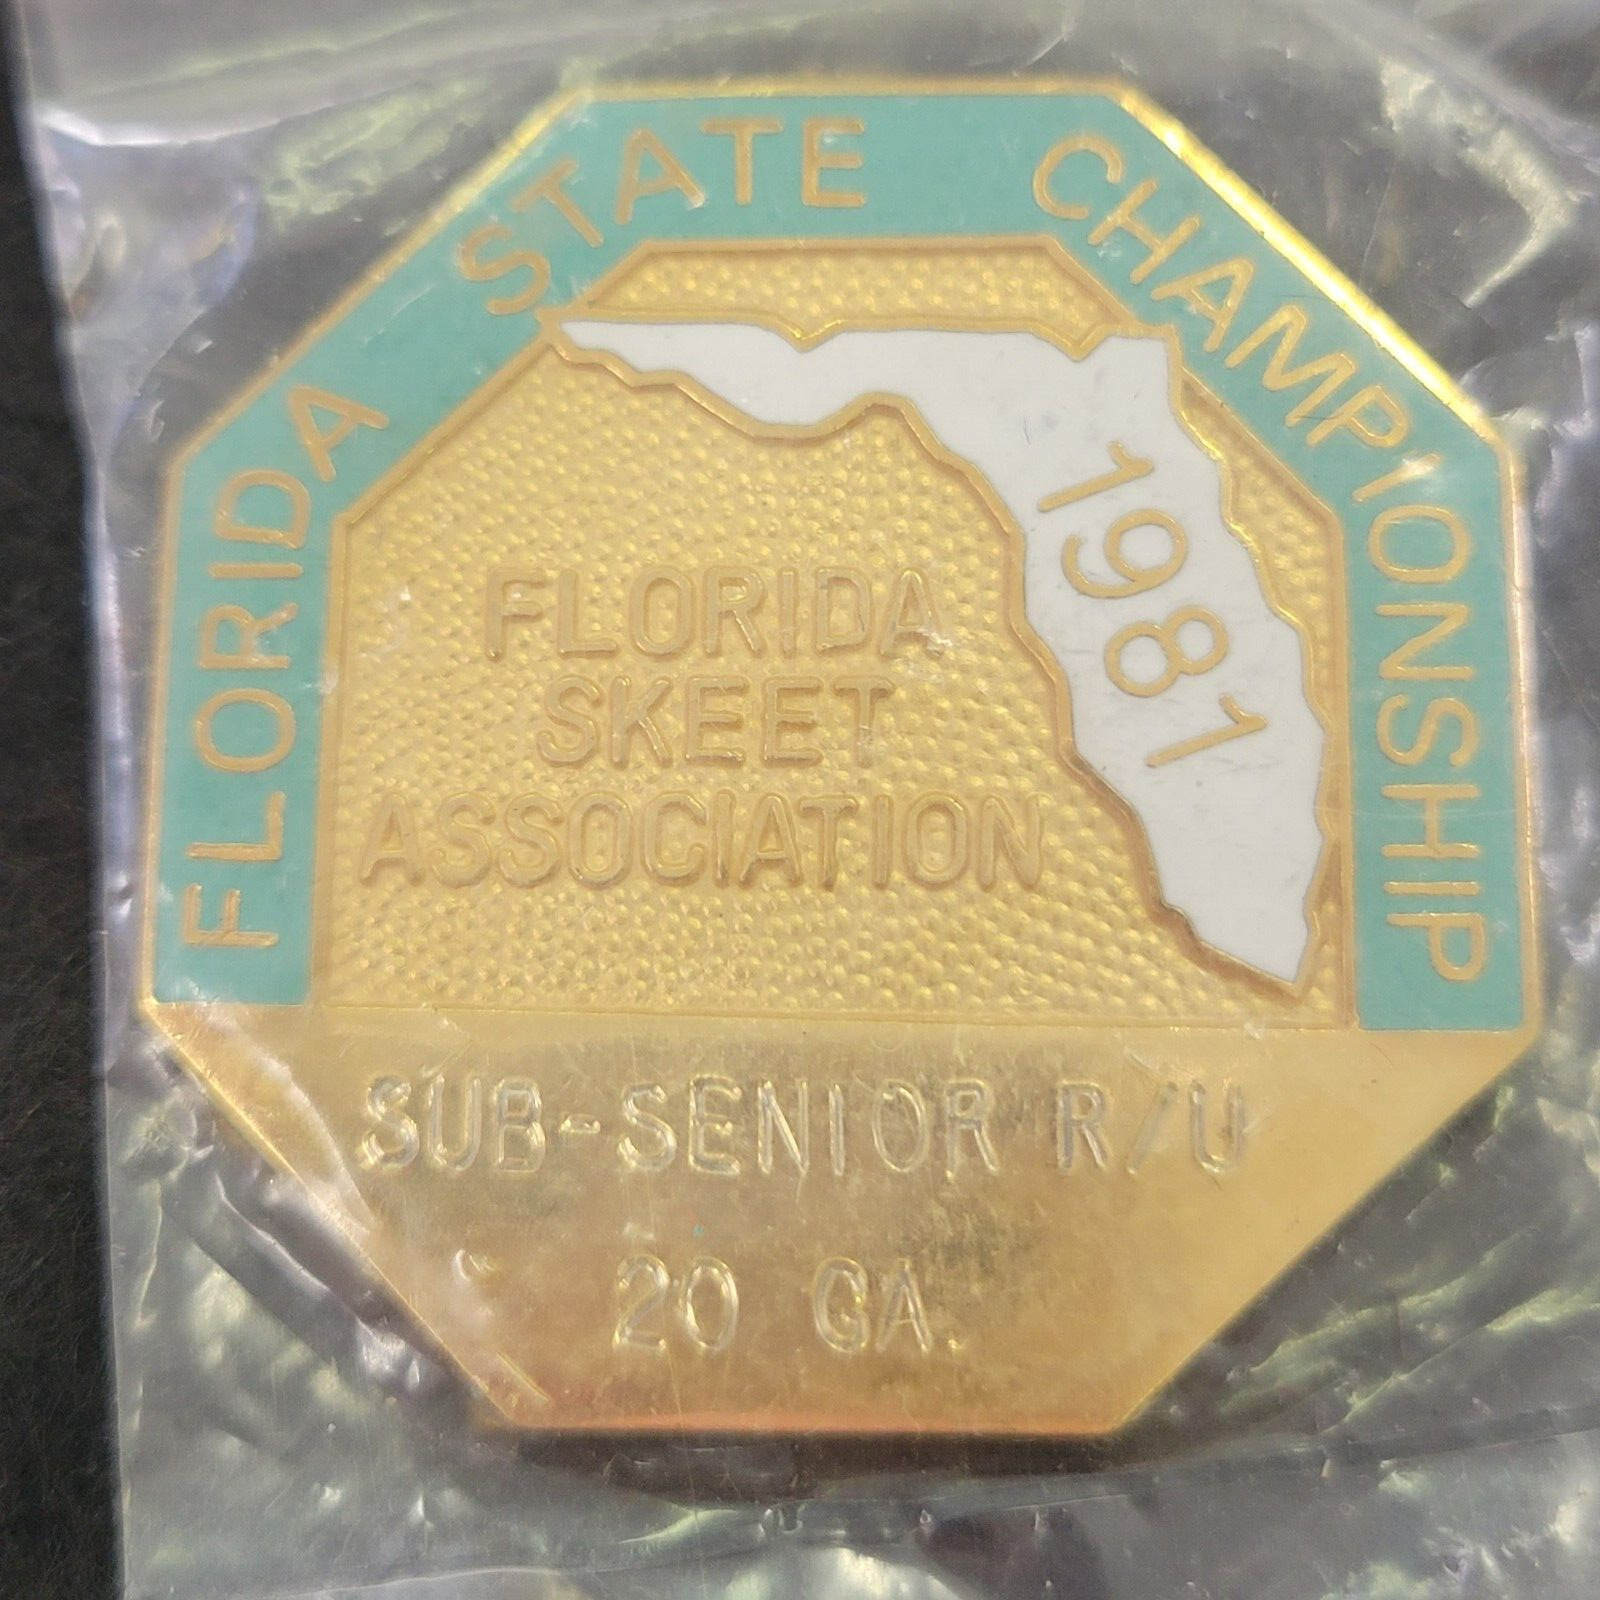 1981 Florida State Championship Skeet Assoc Sub-Senior R/U 20 GA Lapel Badge Pin